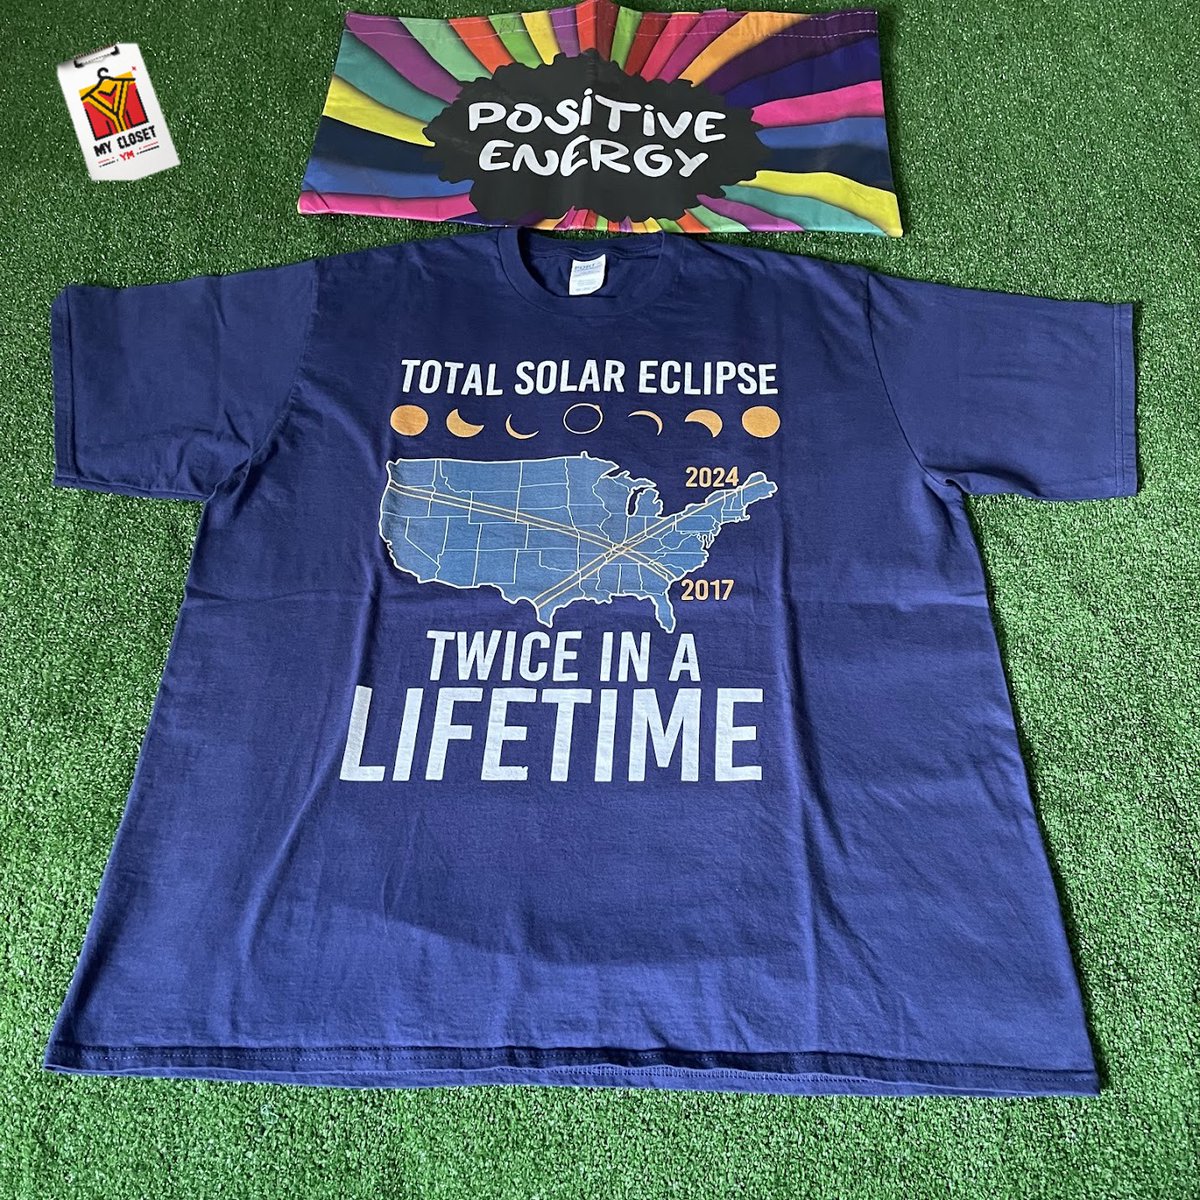 Port Company Twice In A Lifetime Solar Eclipse 2017 / 2024 Blue T-Shirt Size 2XL 

#PortCompanyFashion
#TwiceInALifetime
#SolarEclipse2017
#SolarEclipse2024
#BlueTee
#Size2XL
#CelestialFashion
#EclipseMemories
#AstronomyApparel
#LimitedEditionTee
ebay.com/itm/1264526306…